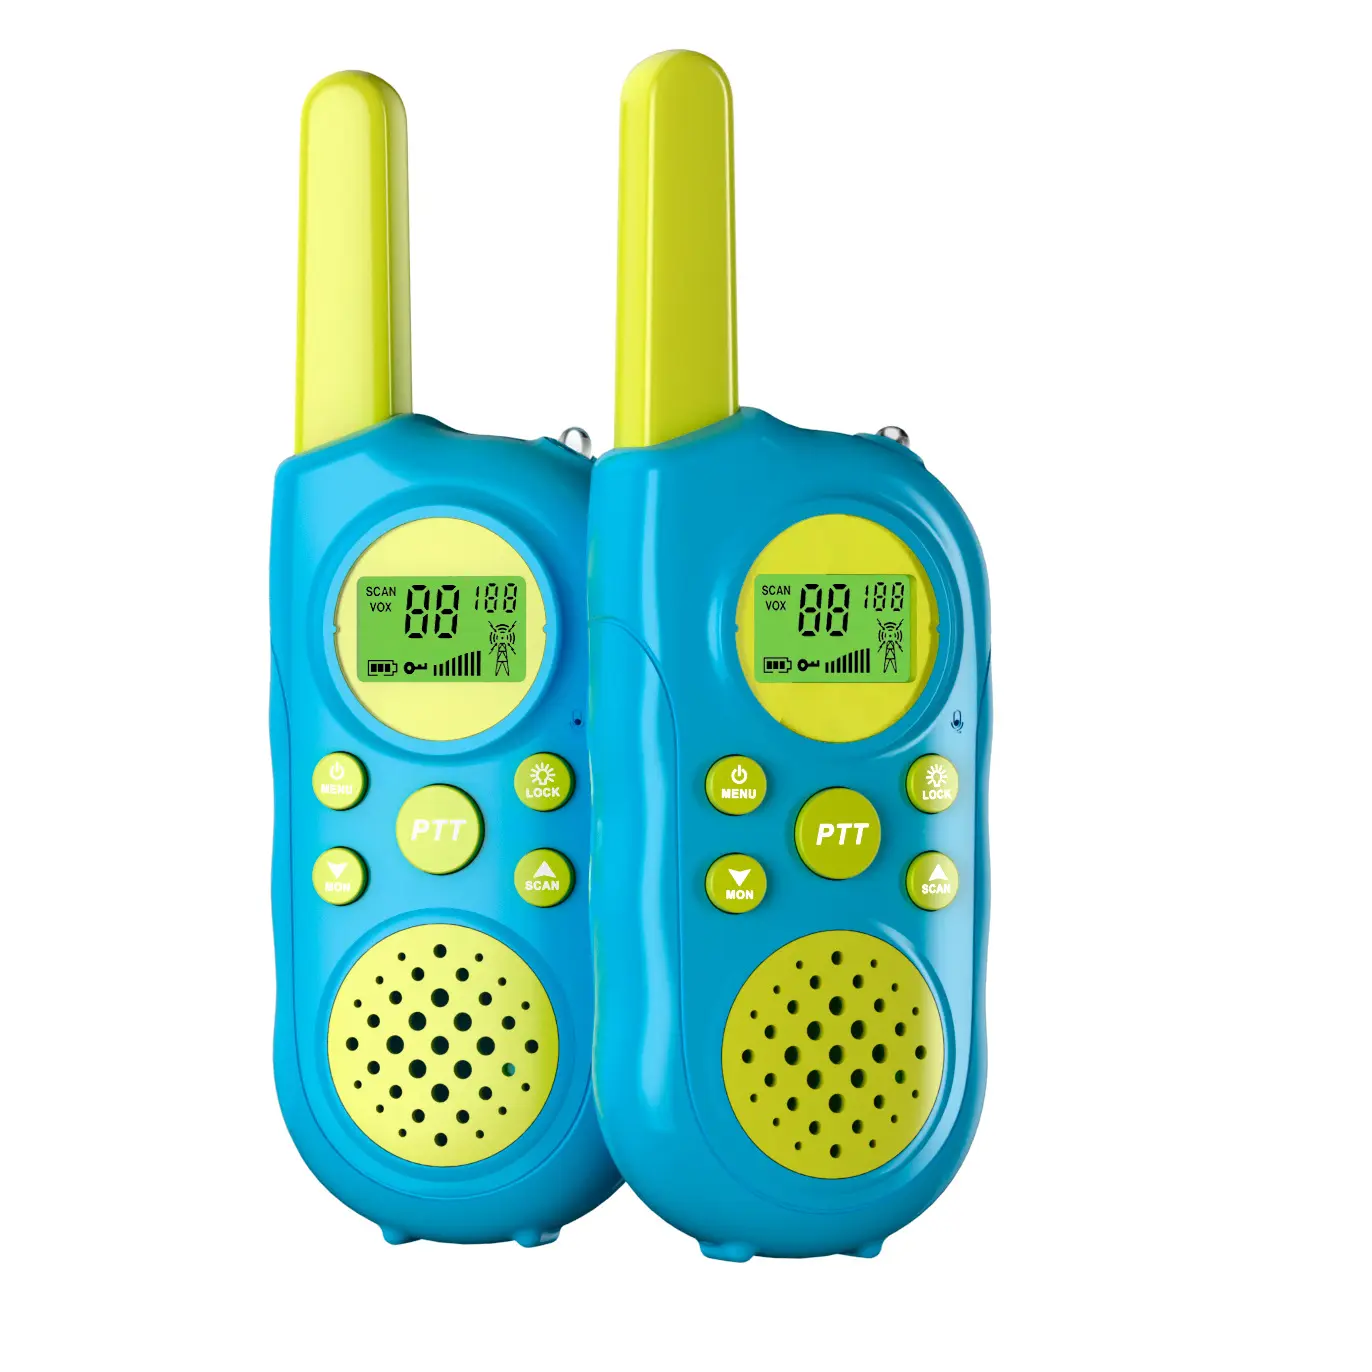 New Walkie talkie for children Walkie-talkies Handheld Transceiver 3KM Range radio Interphone Toys For Kids Xmas Christmas Gift